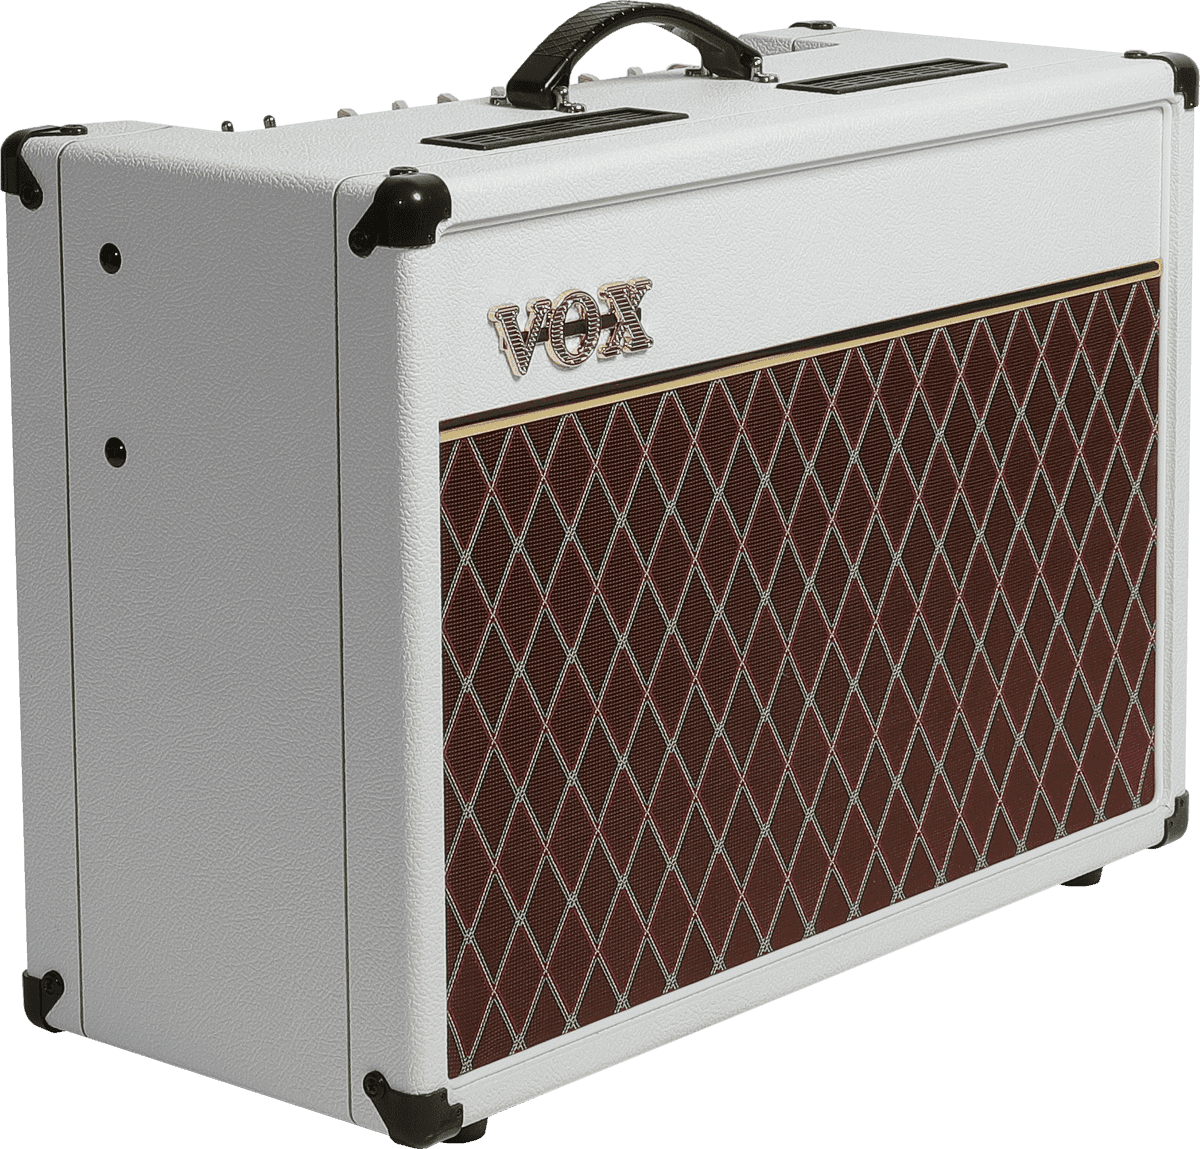 Vox Ac15c1-wb Ltd 15w 1x12 White Bronco - Combo amplificador para guitarra eléctrica - Variation 1